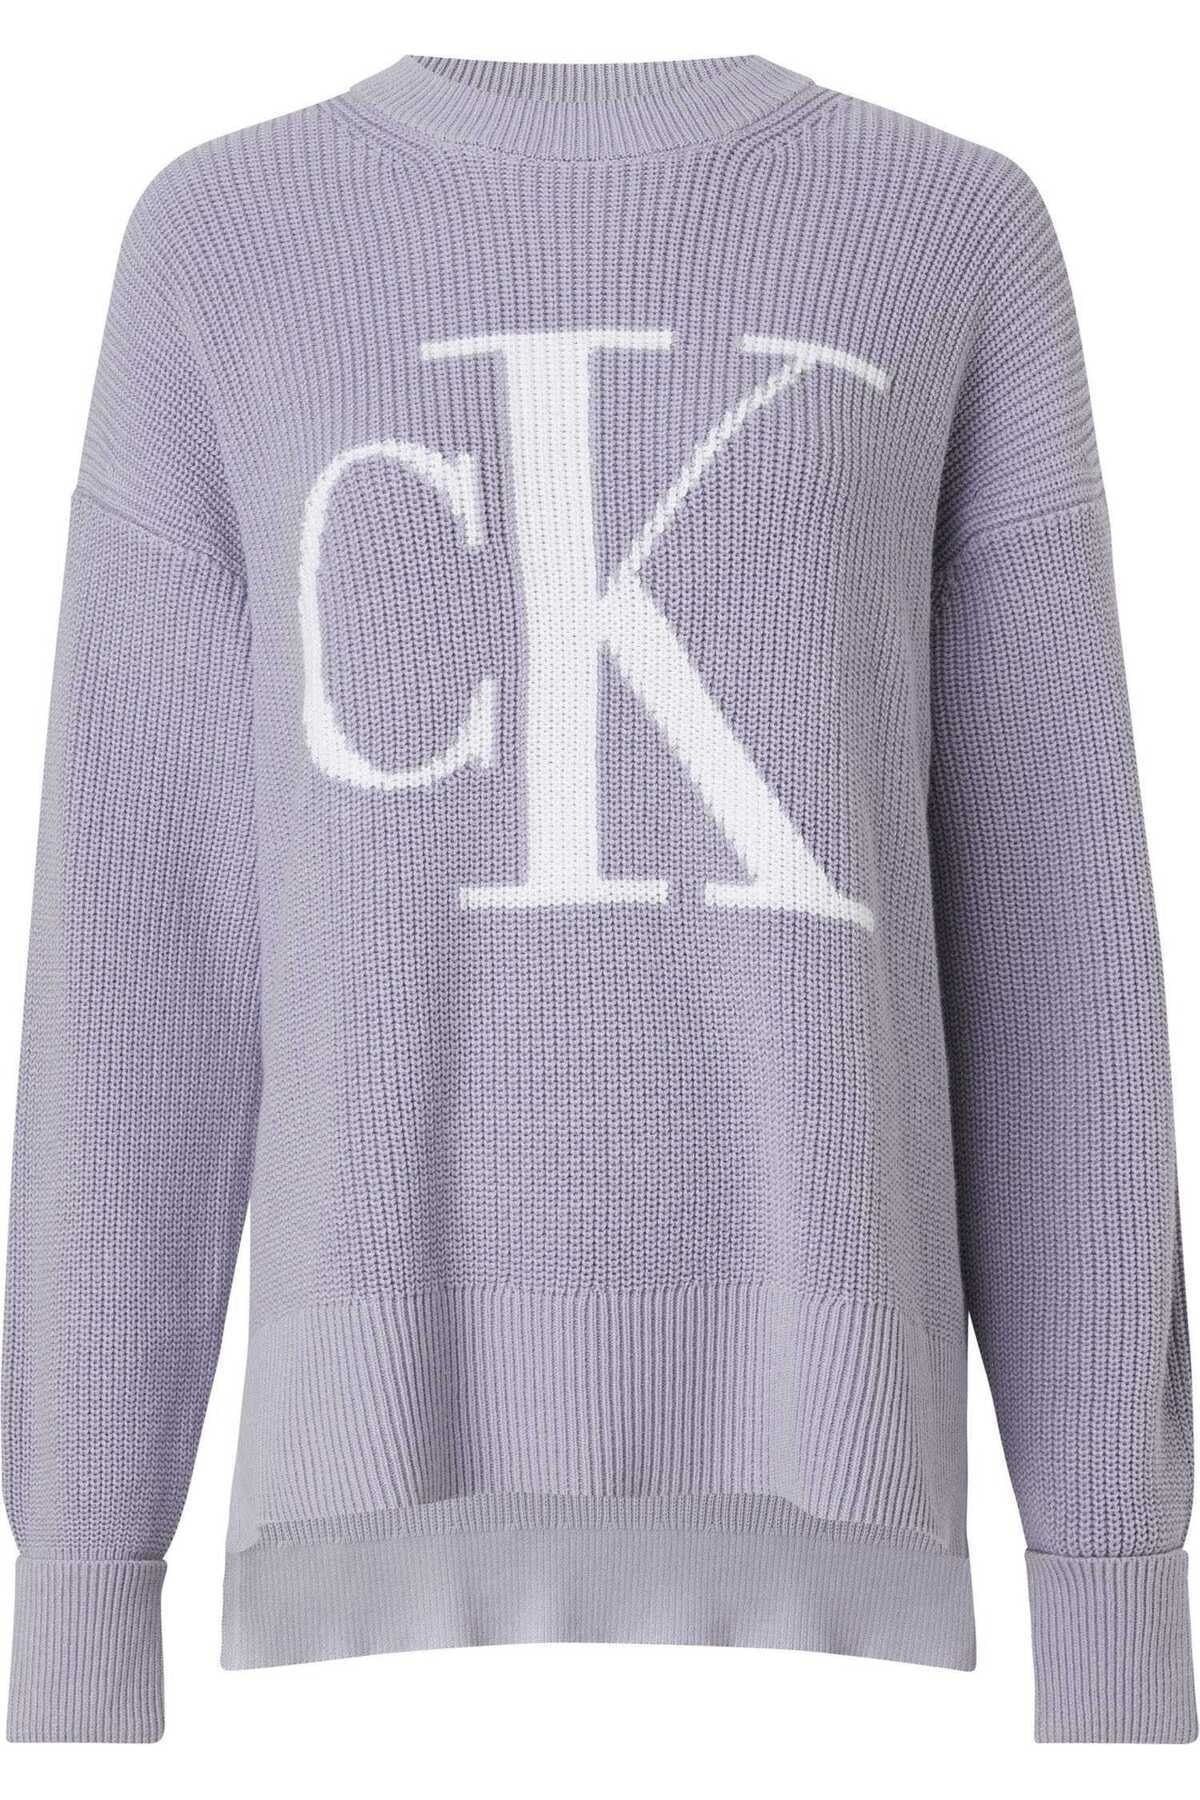 Calvin Klein Ck intarsia Loose Sweater